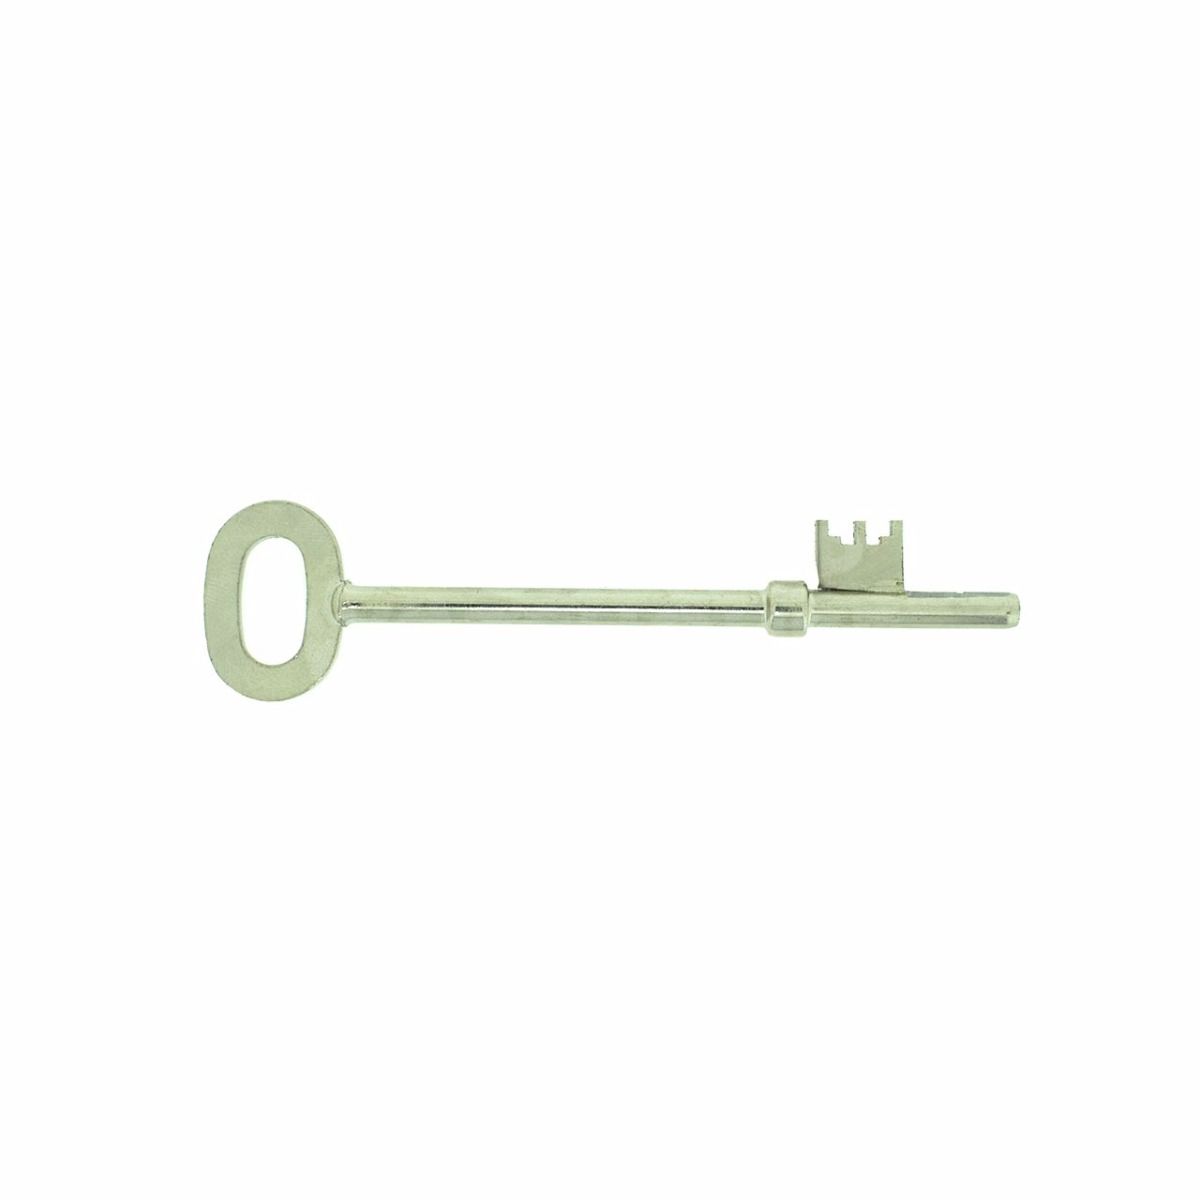 Extra long key for Legge locks (extra 30mm)